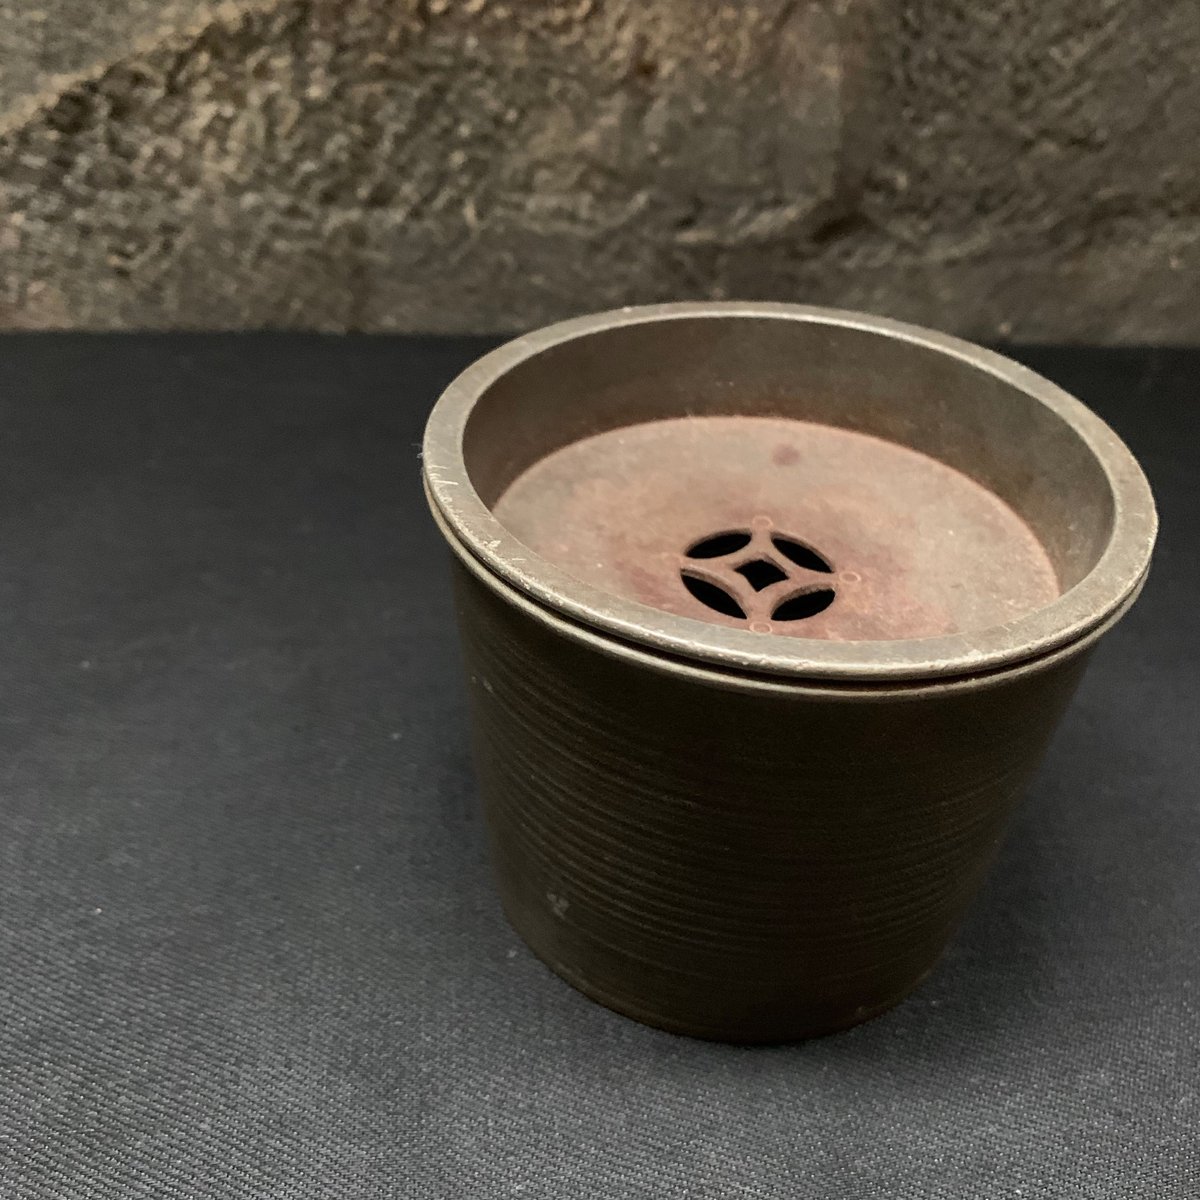 Japan Antique 古錫 間村自造 純錫 錫器 在印 盃洗 建水 こぼし 煎茶